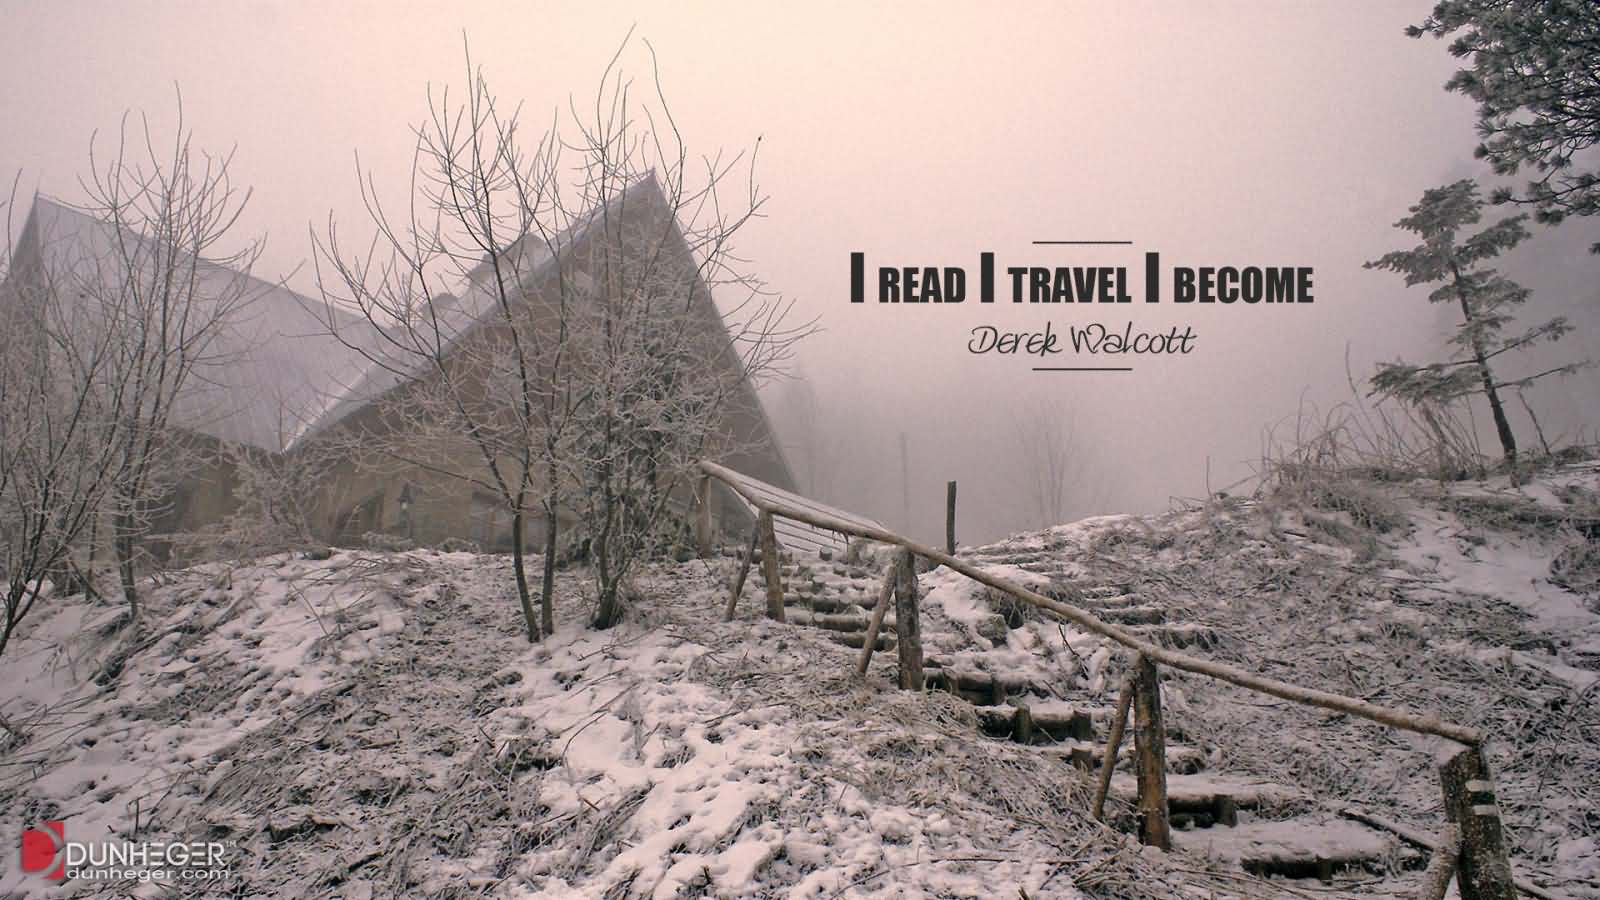 I read I travel I become. - Derek Walcott